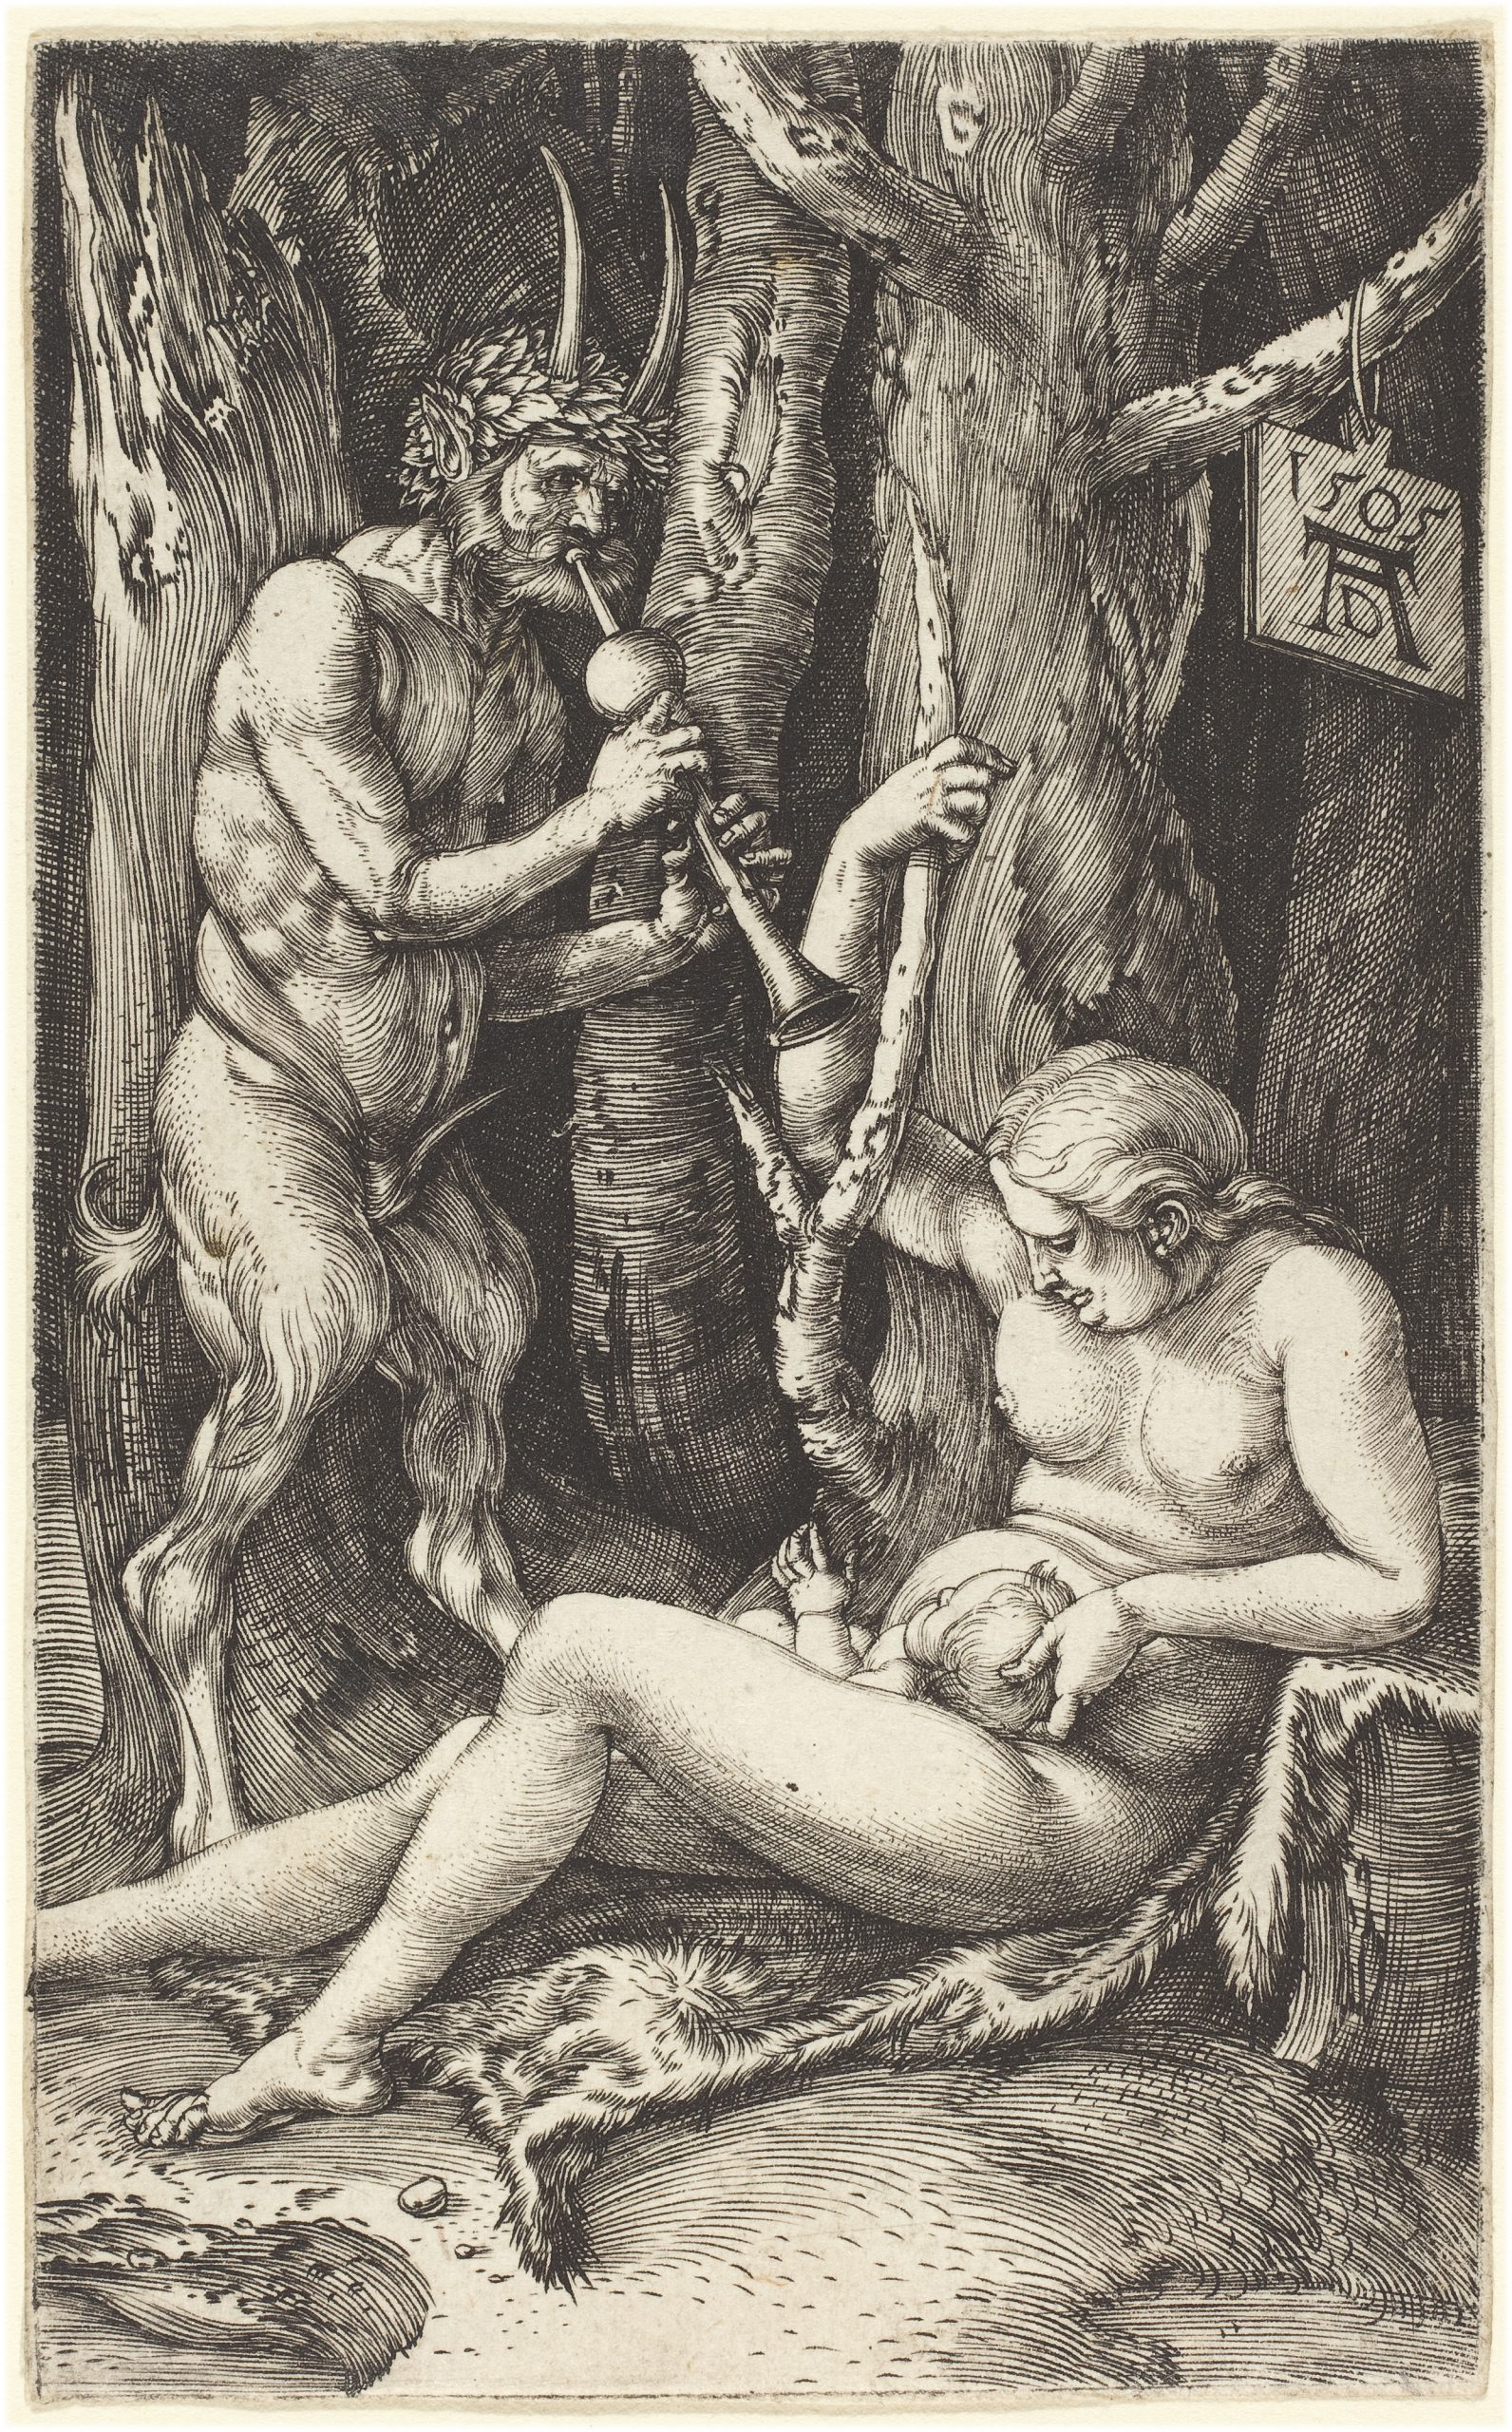 خانەوادەی ساتیر - ئالبرێخت دورەر - هێڵکاری \ گرافیک ١٥٠٥ During the Renaissance, satyrs began to appear in domestic scenes,[52][122] a trend exemplified by Albrecht Dürer's 1505 engraving The Satyr's Family